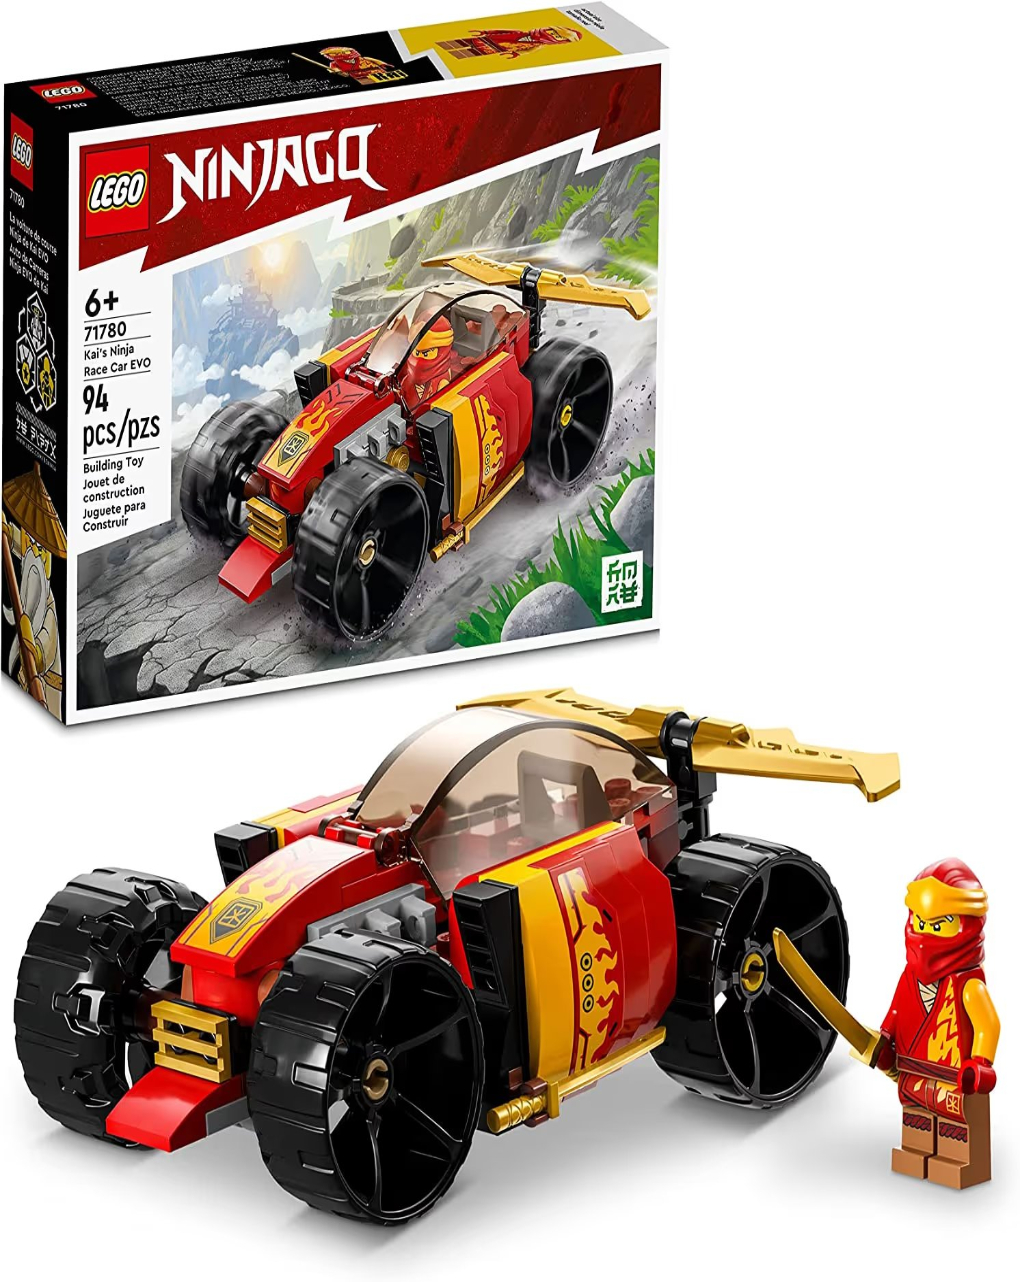 Lego minecraft kai’s ninja race car evo 71780 - Lego Ninjago